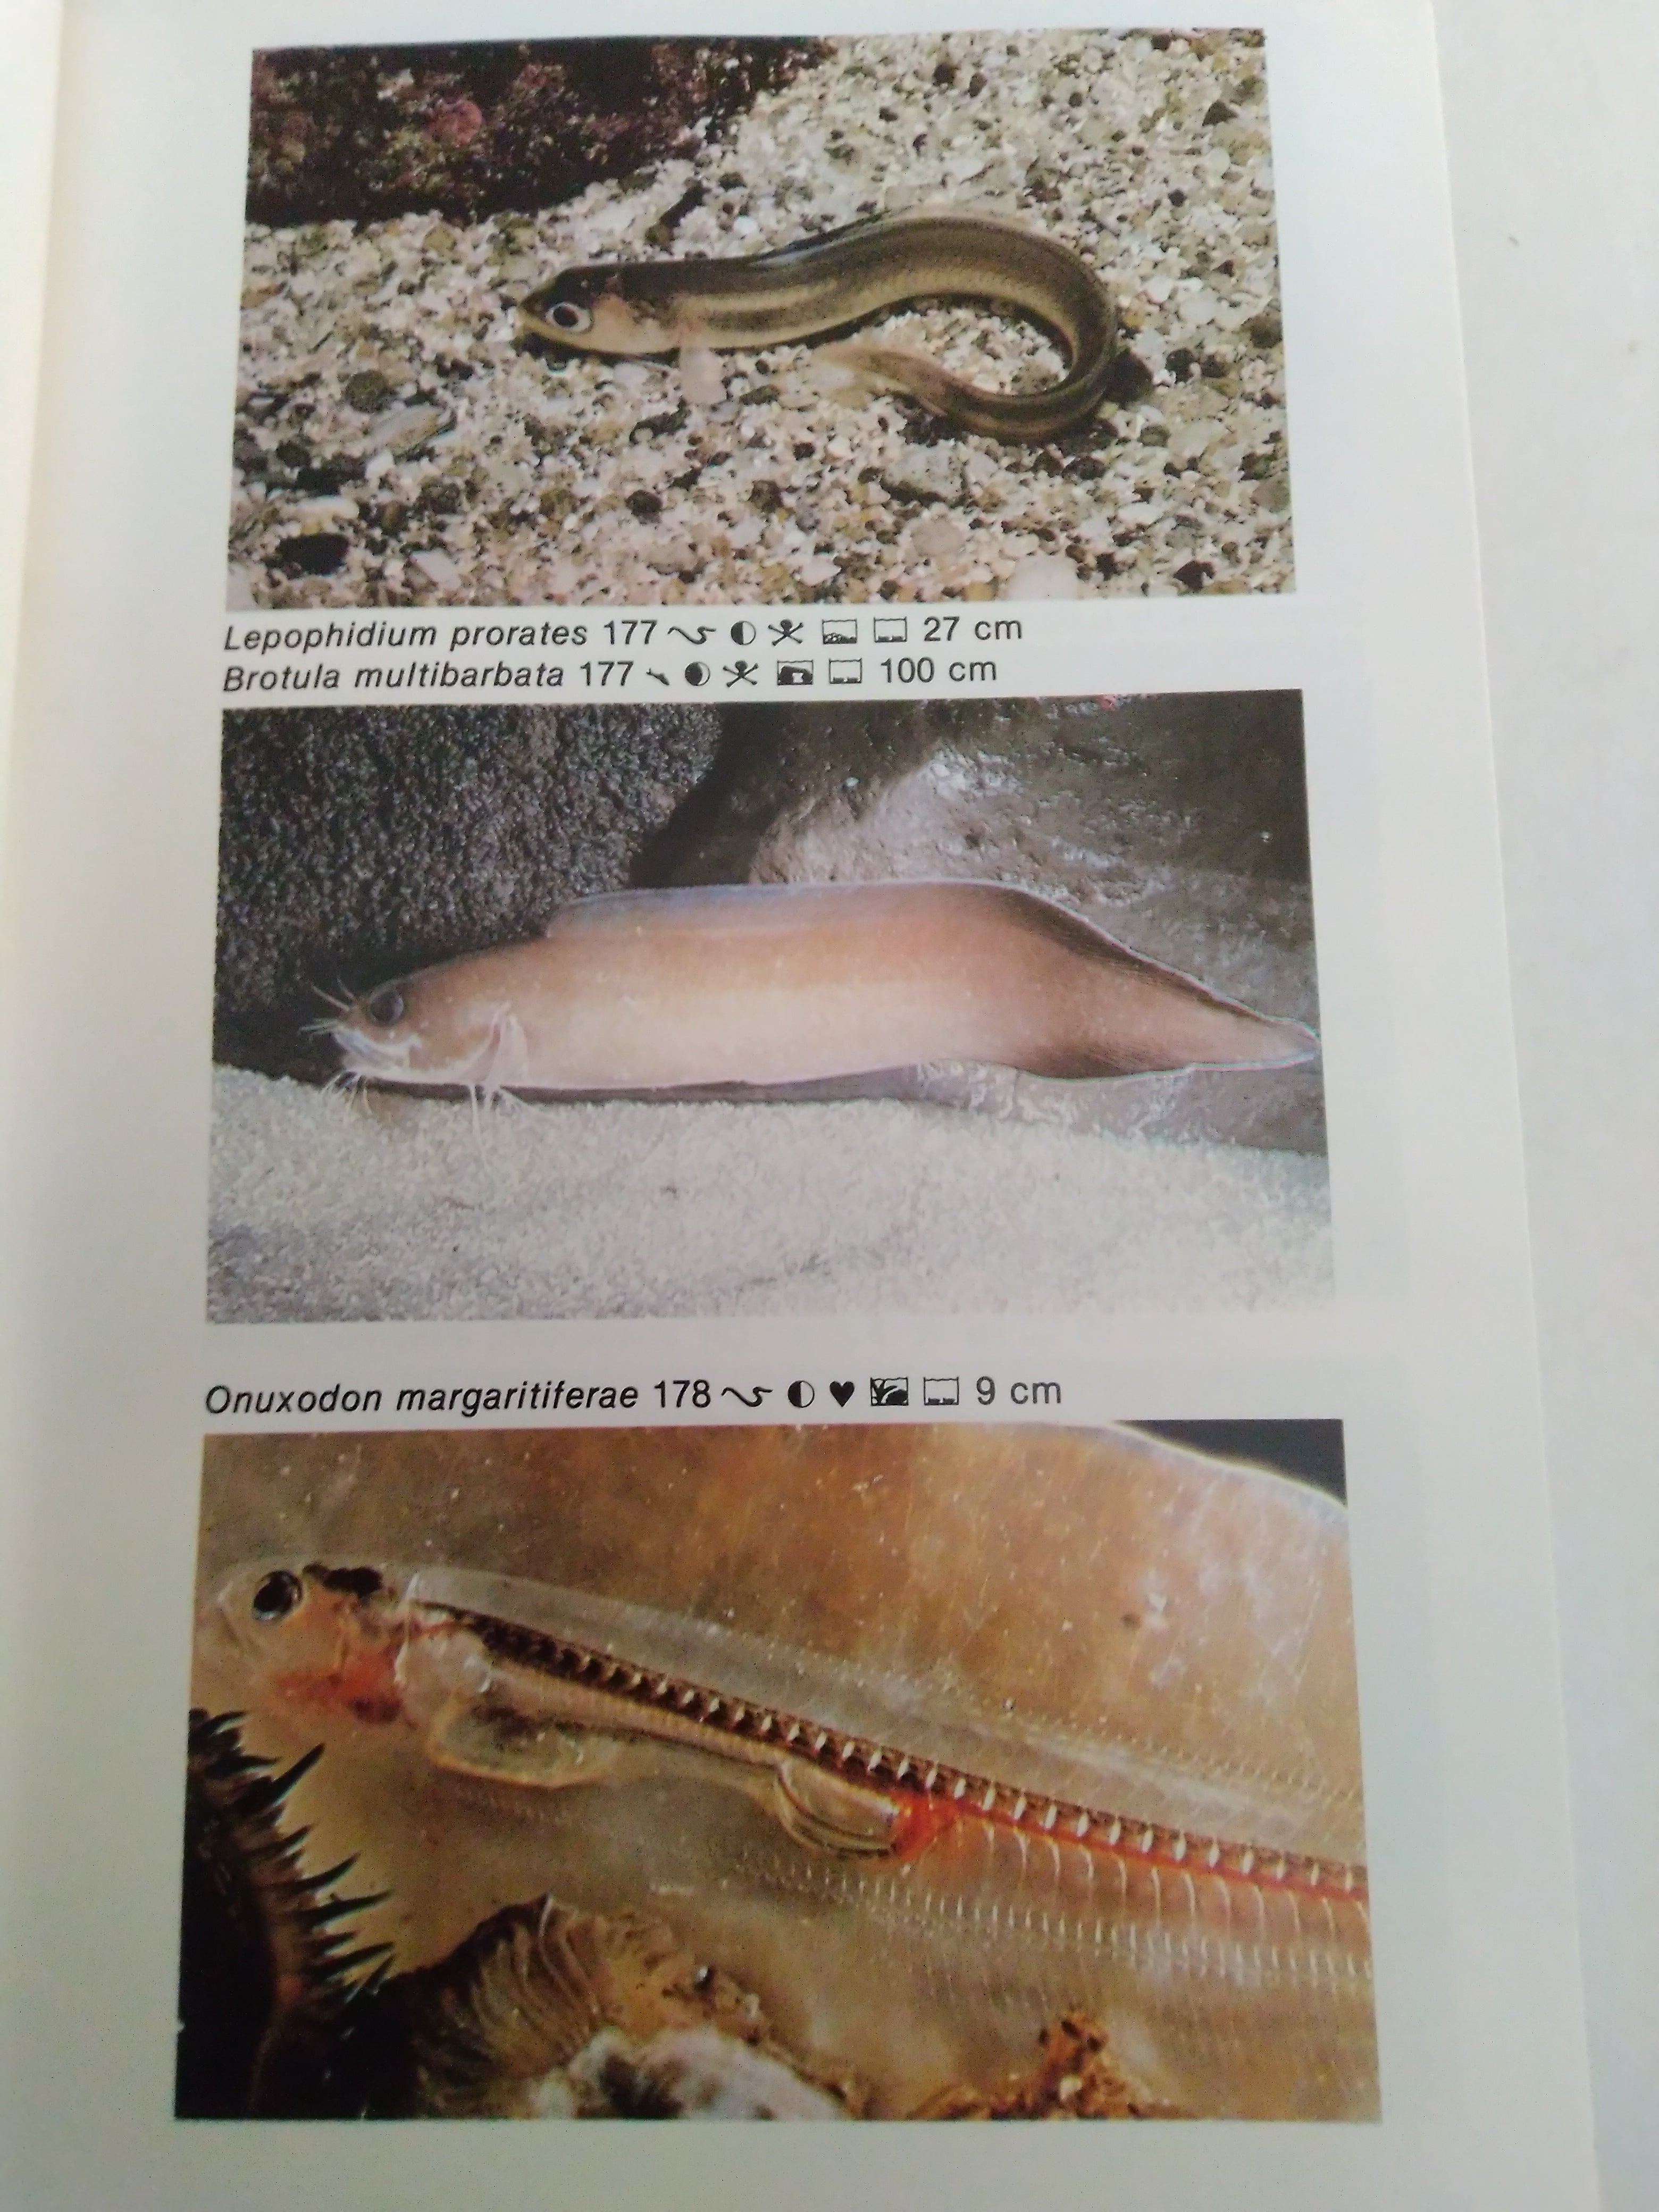 Dr. Burgess's Atlas of Marine Aquarium Fishes Second Edition by Dr. Warren E. Burgess